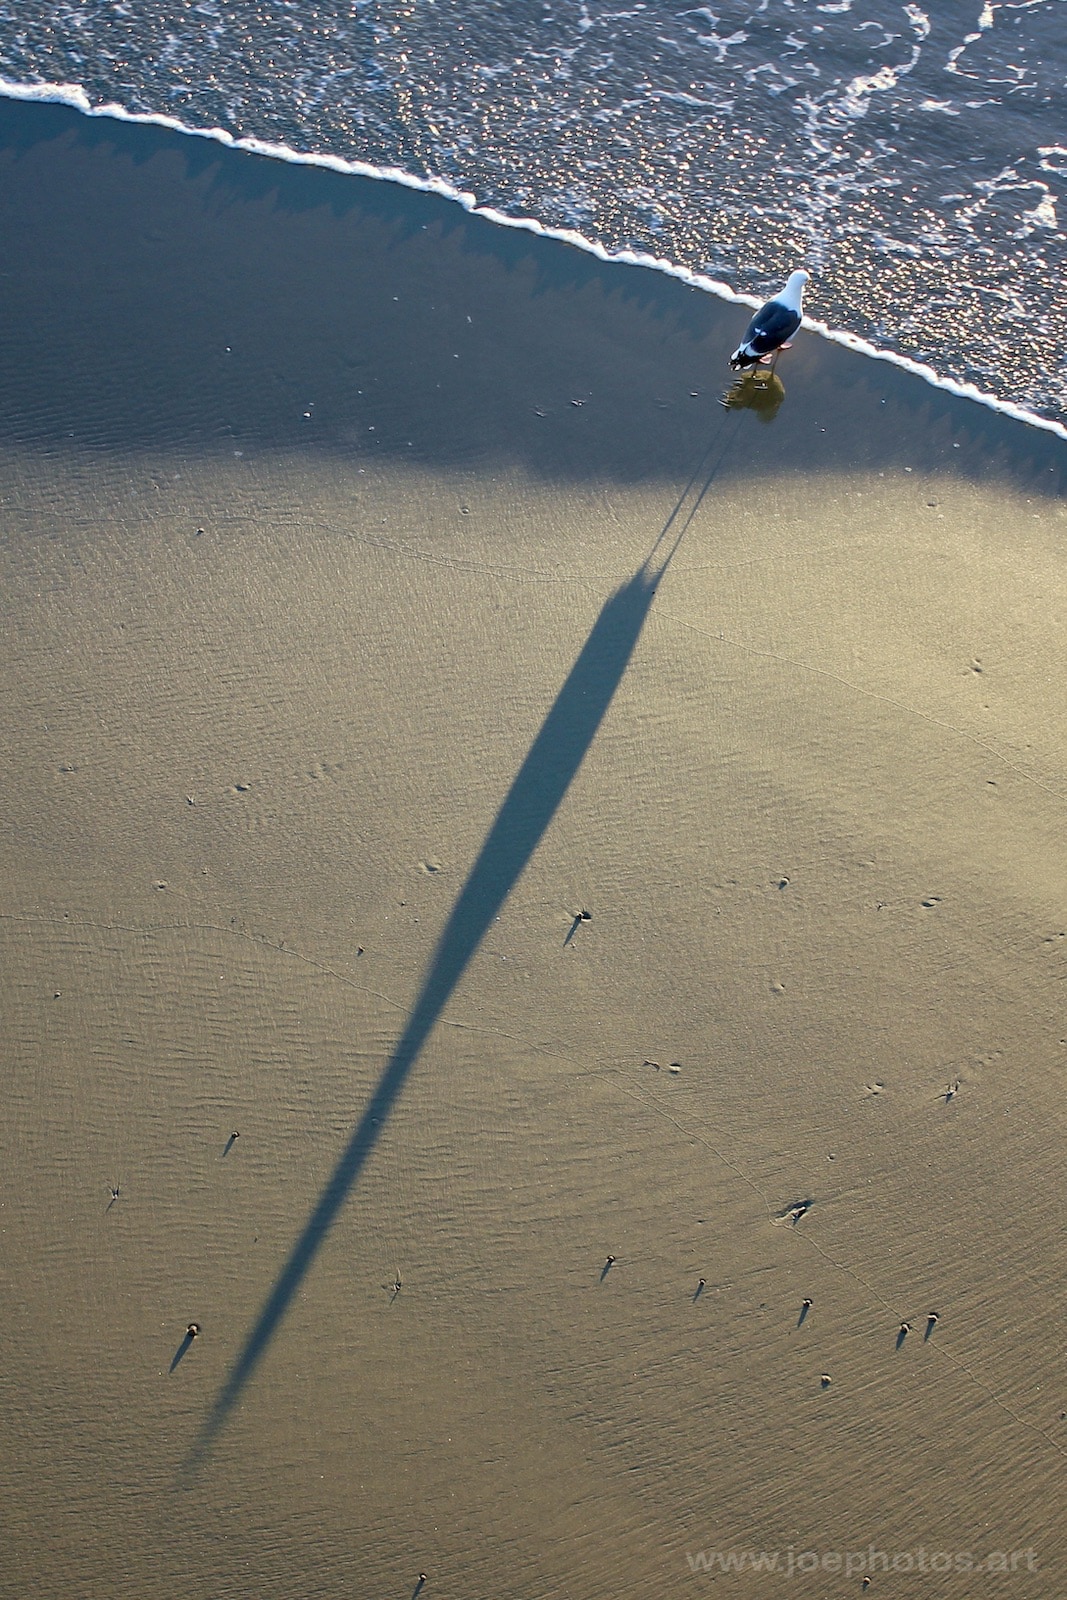 Sea gull with long shadow.